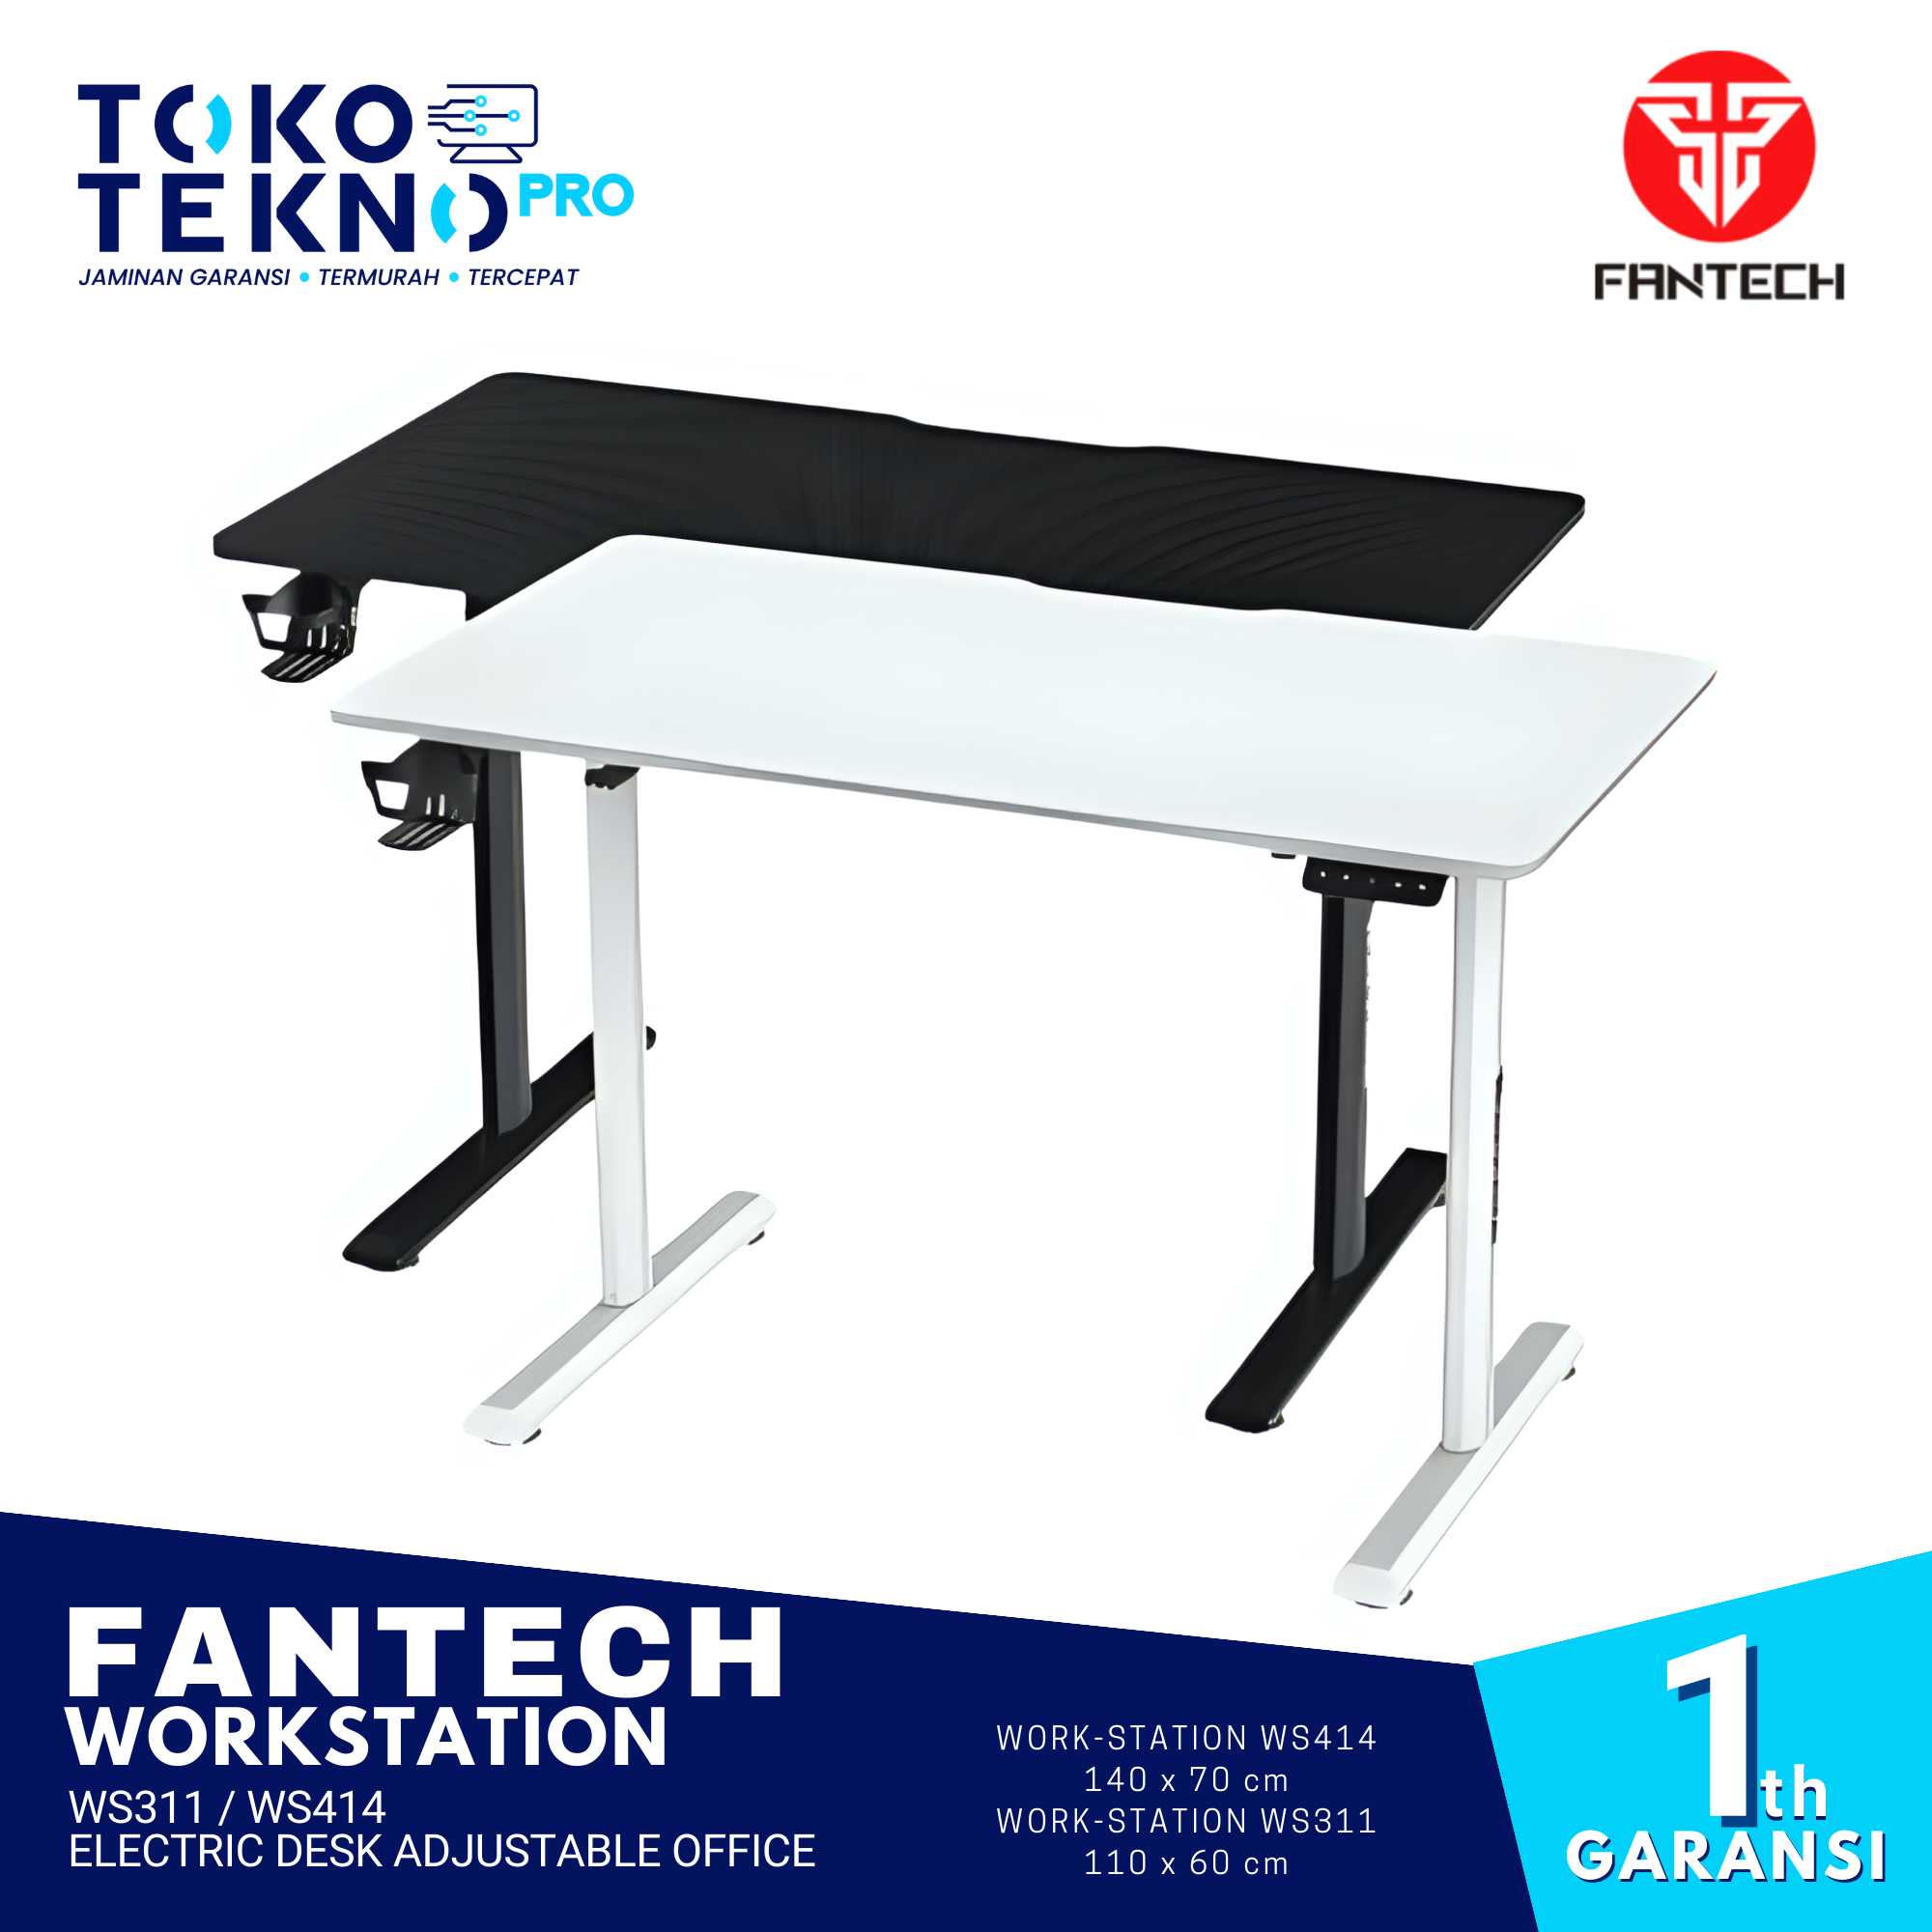 Fantech WorkStation WS311 / WS414